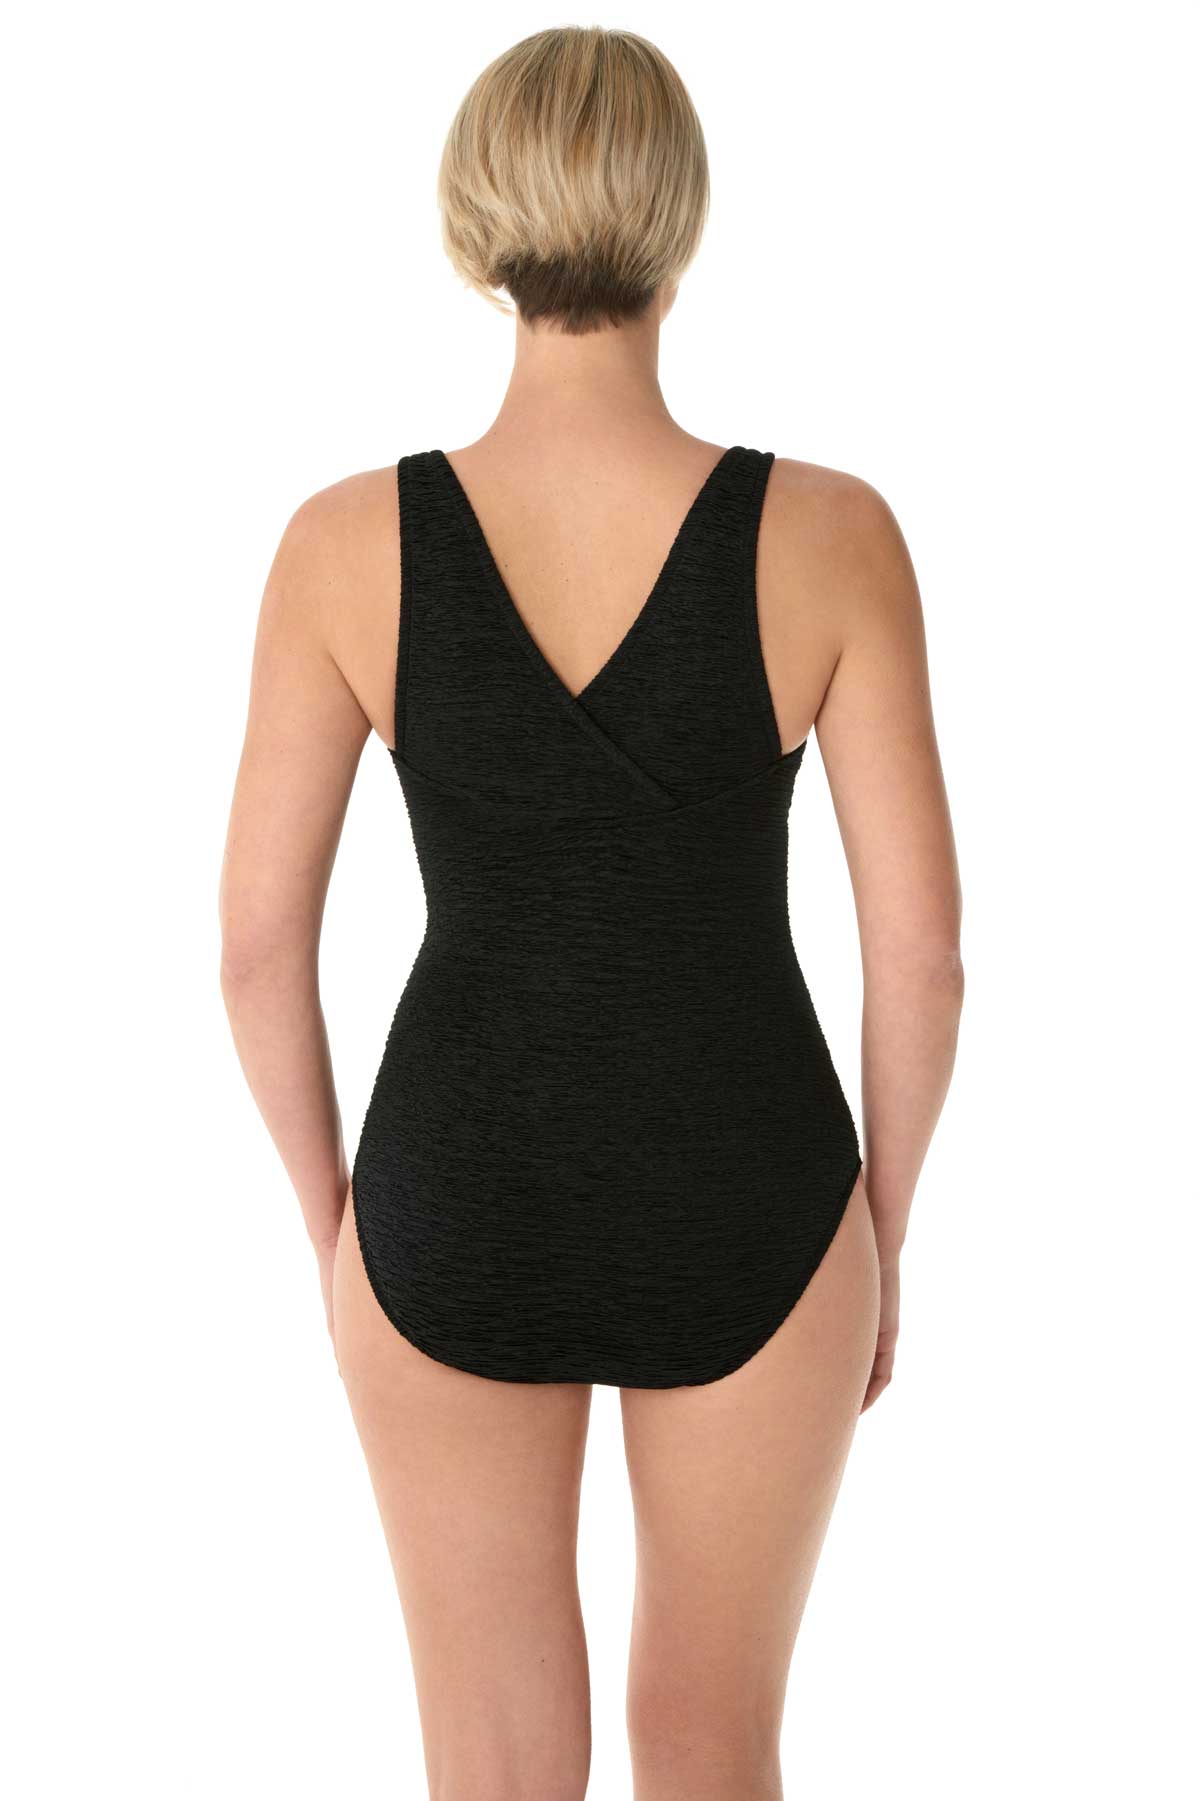 Penbrooke Krinkle Plus Size Chlorine Resistant One Piece Scoop Neck Sheath  Swimsuit at